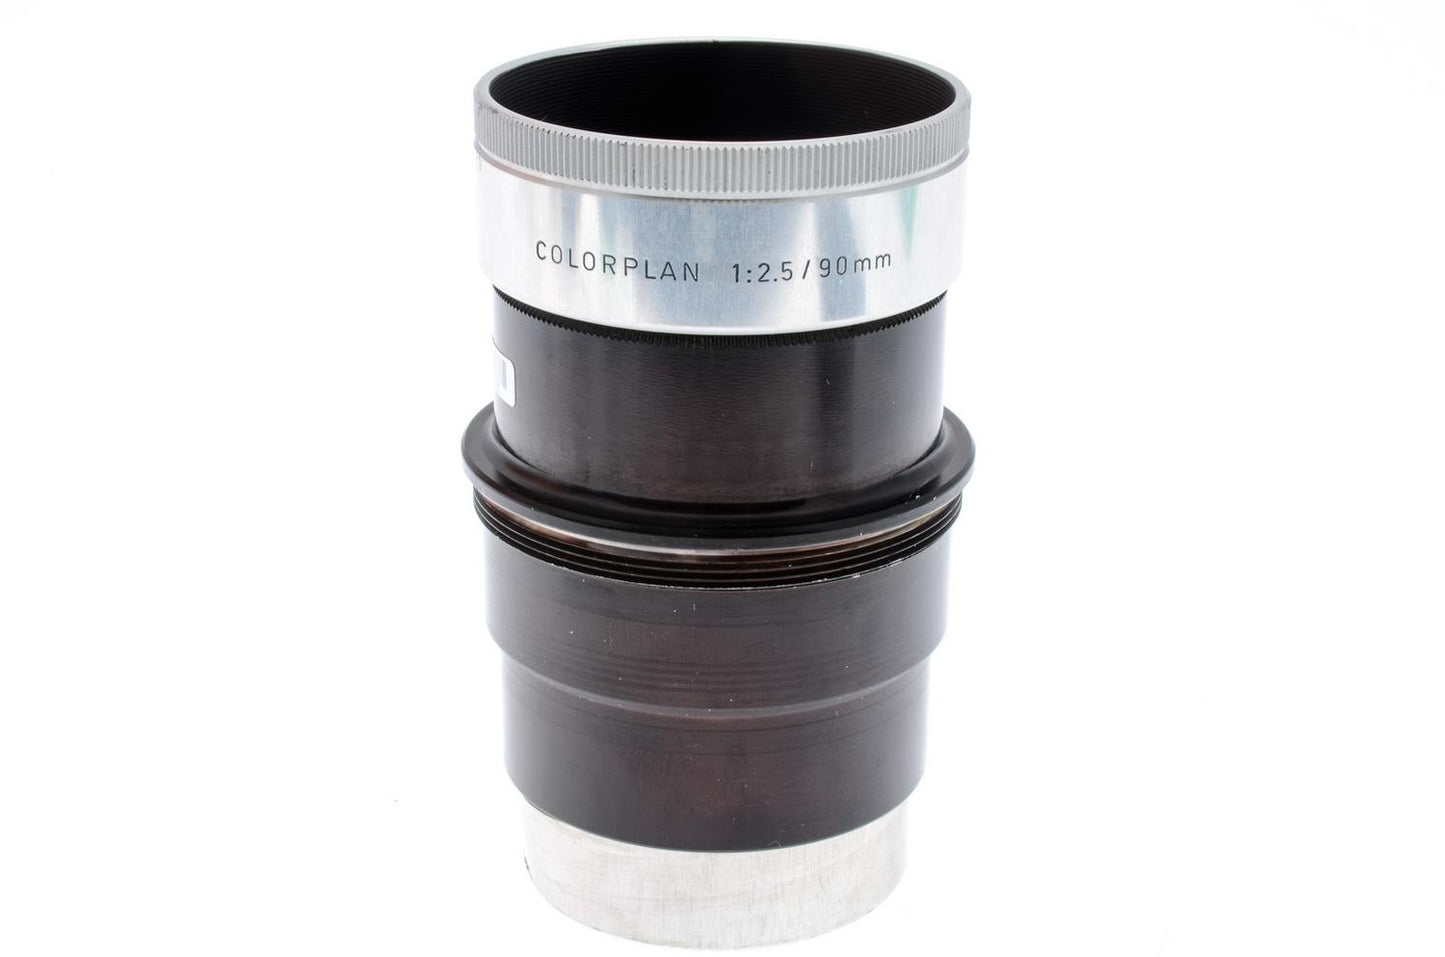 Leica 90mm f2.5 Colorplan - Lens